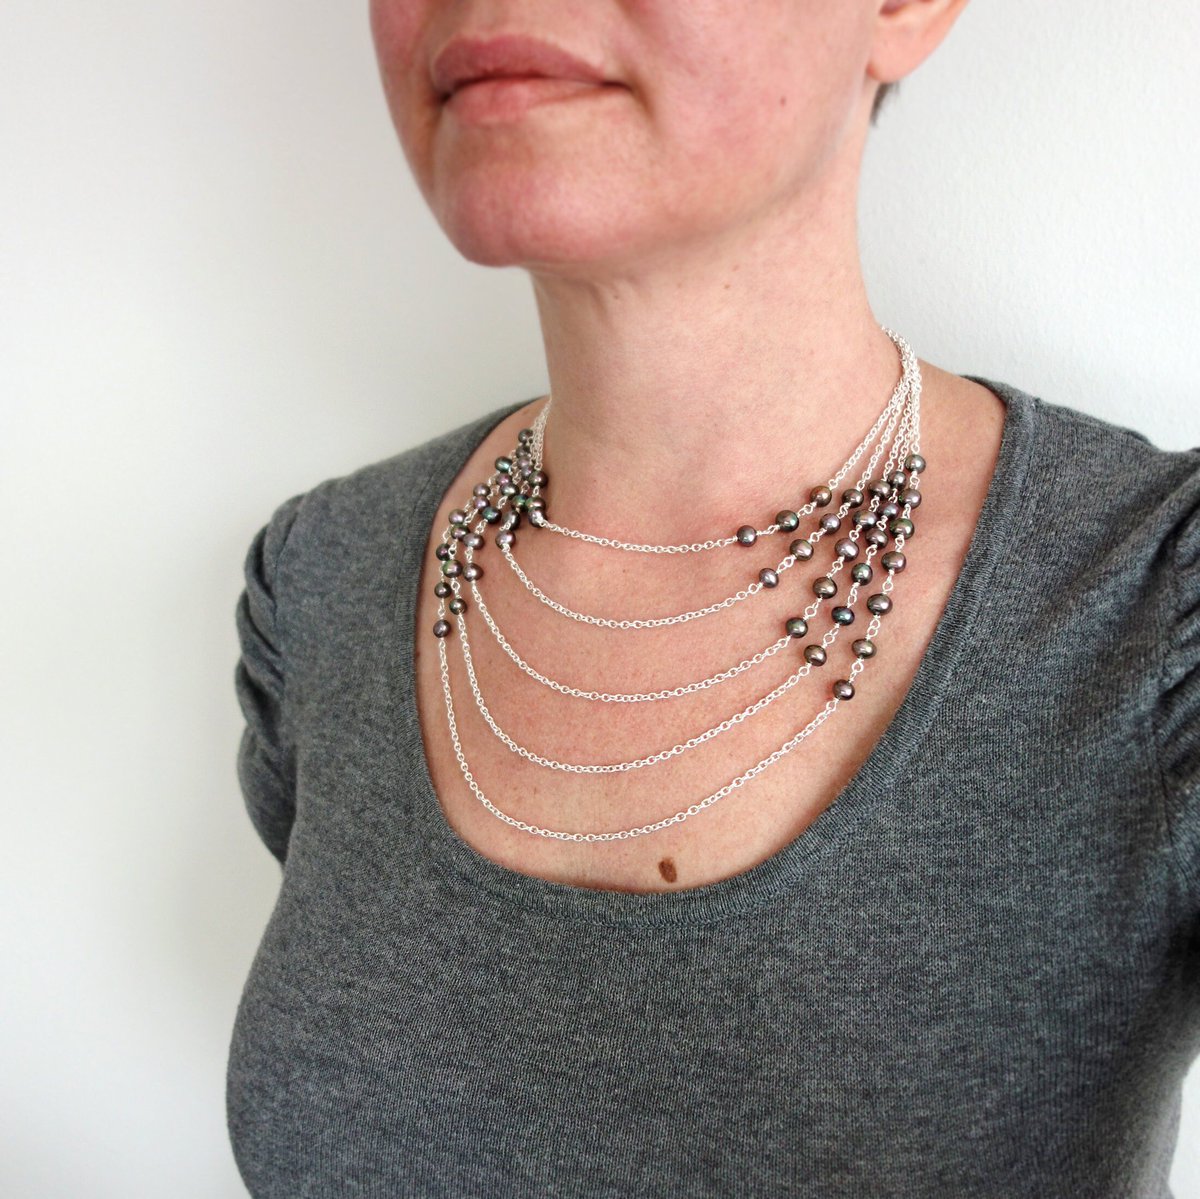 Statement Necklace Peacock Pearls Multi Strand Chains. #elegant #jewelry #etsy #giftforher #shopsmall #EtsySellers
tline.etsy.com/listing/603041… via @Etsy